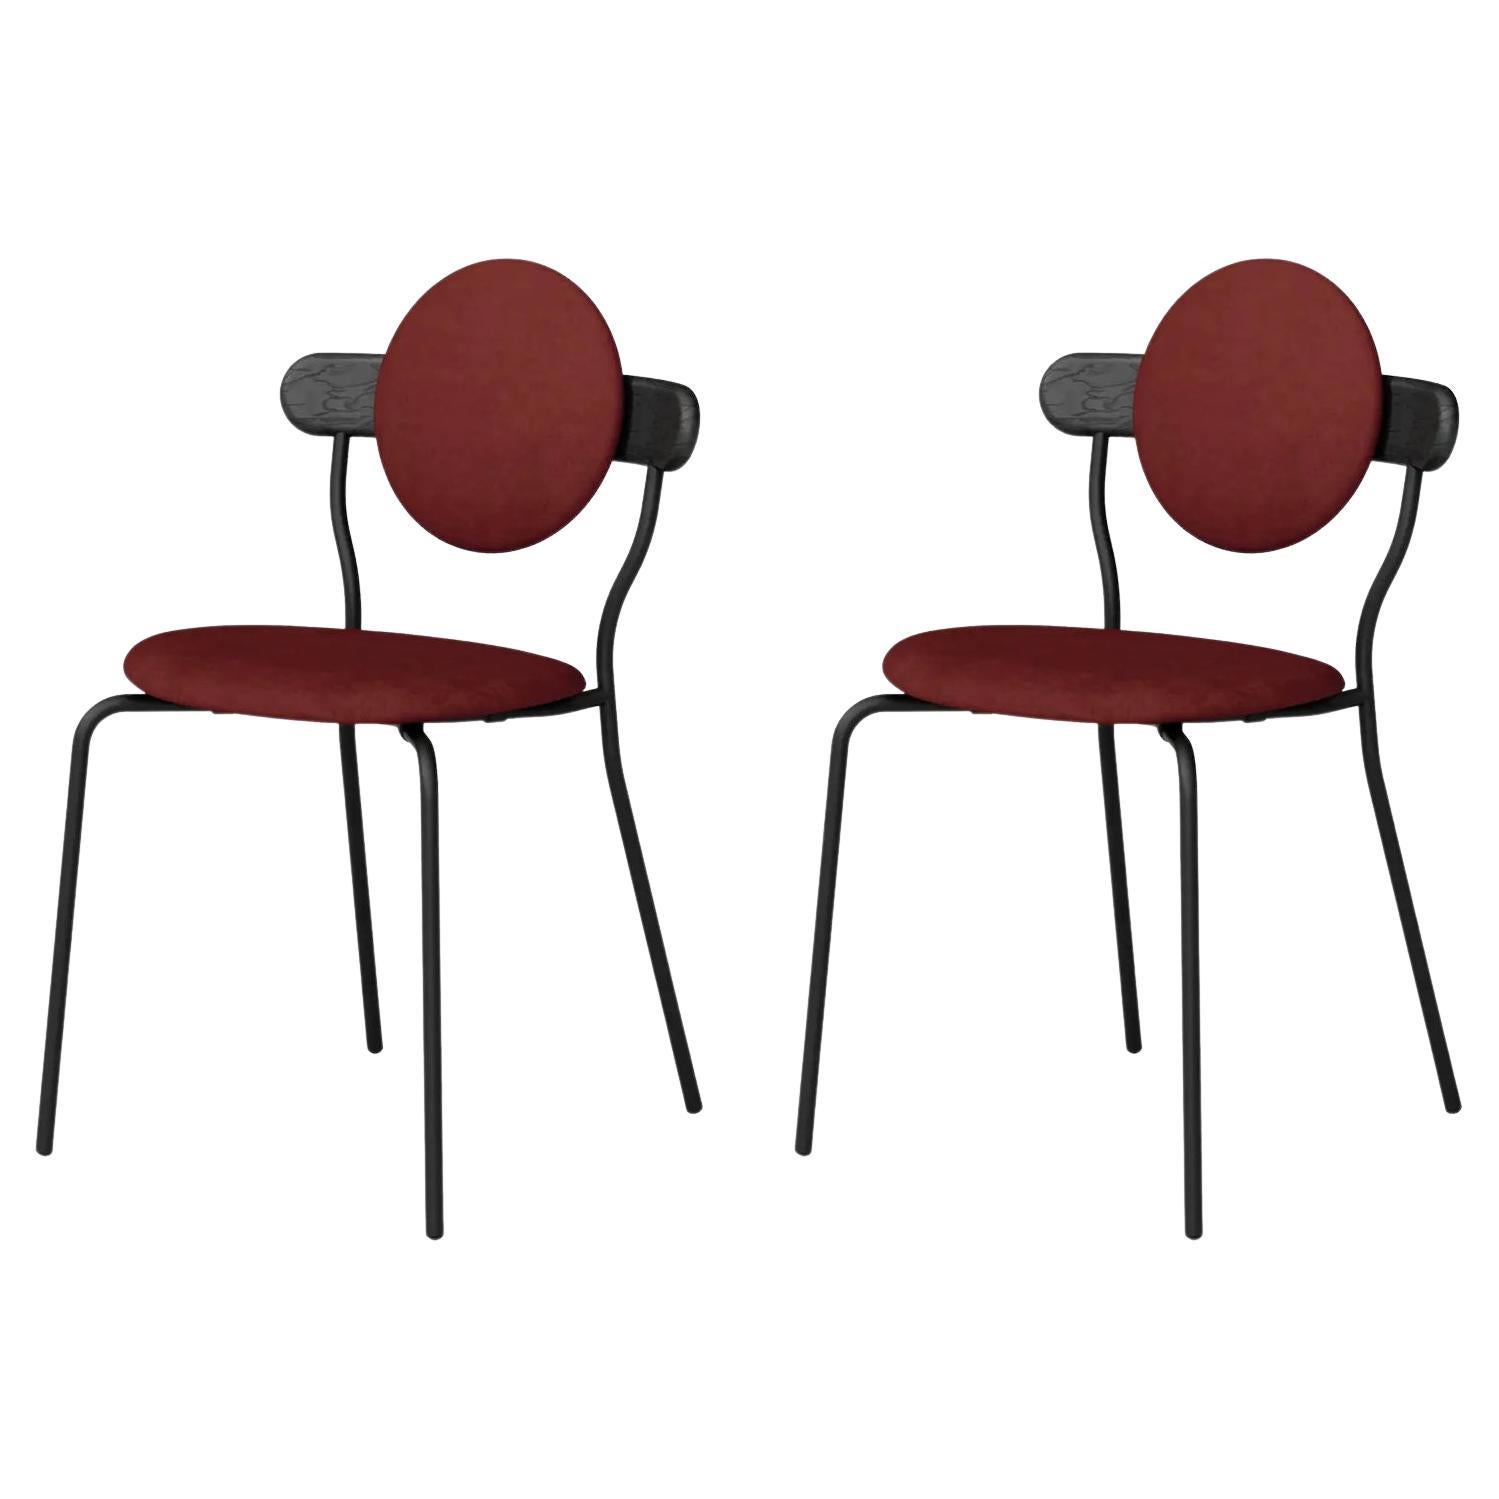 Set of 2 Upholstered "Planet" Chair, Jean-Baptiste Souletie